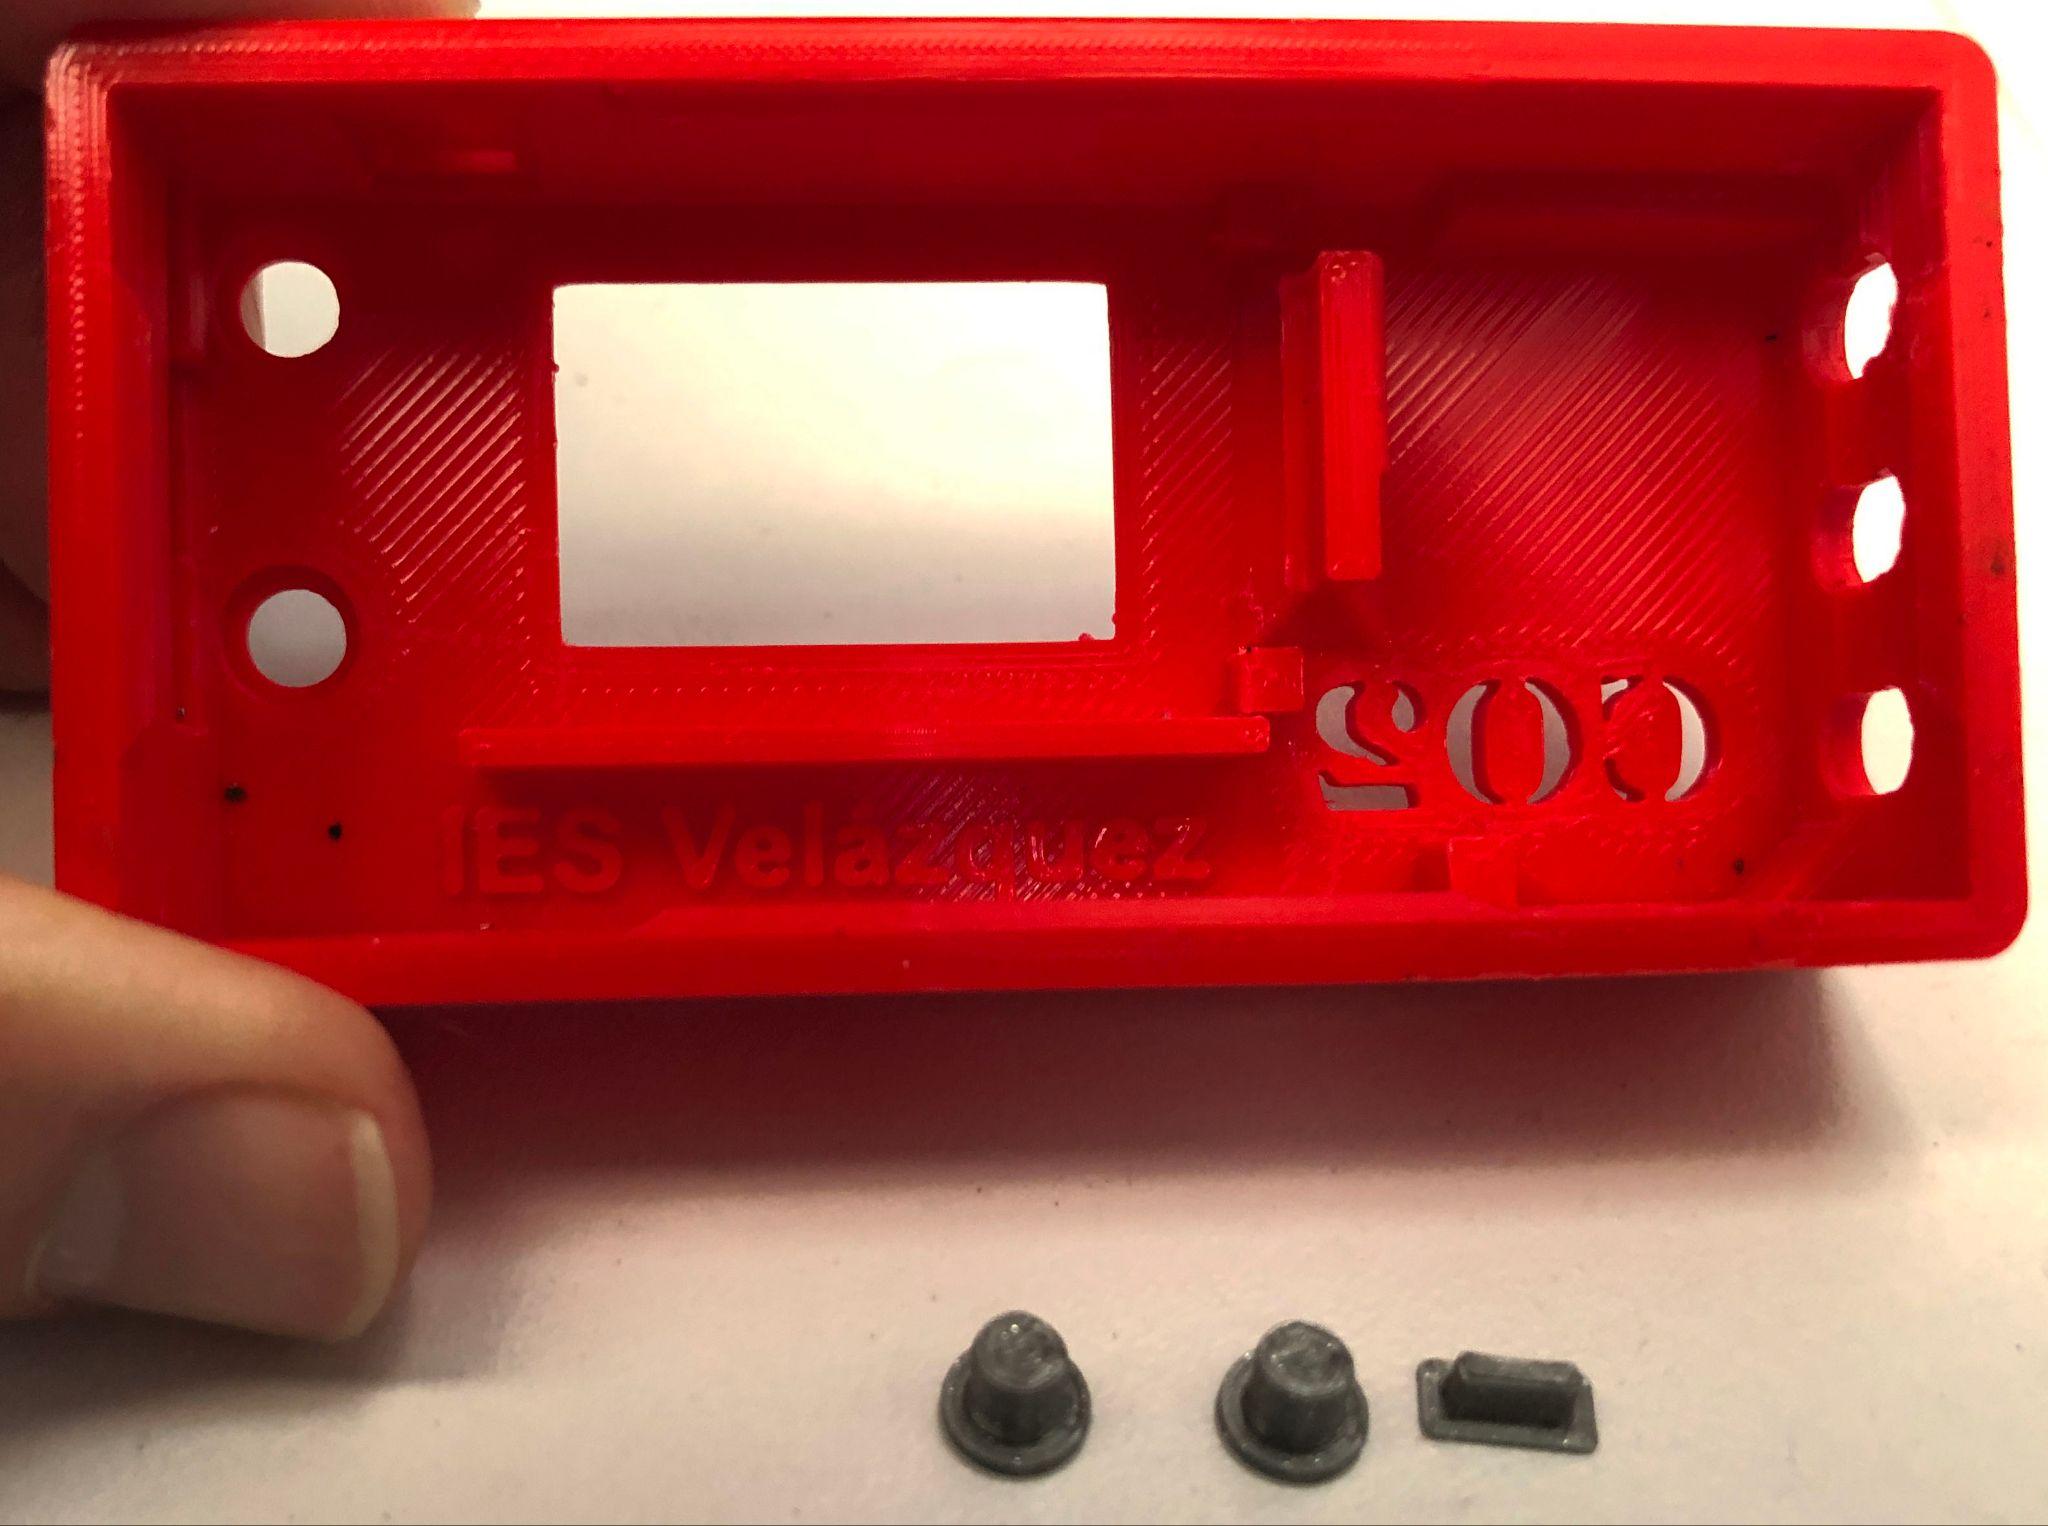 Construcción sensor CO2. Impresión aditiva 3D. Parte II